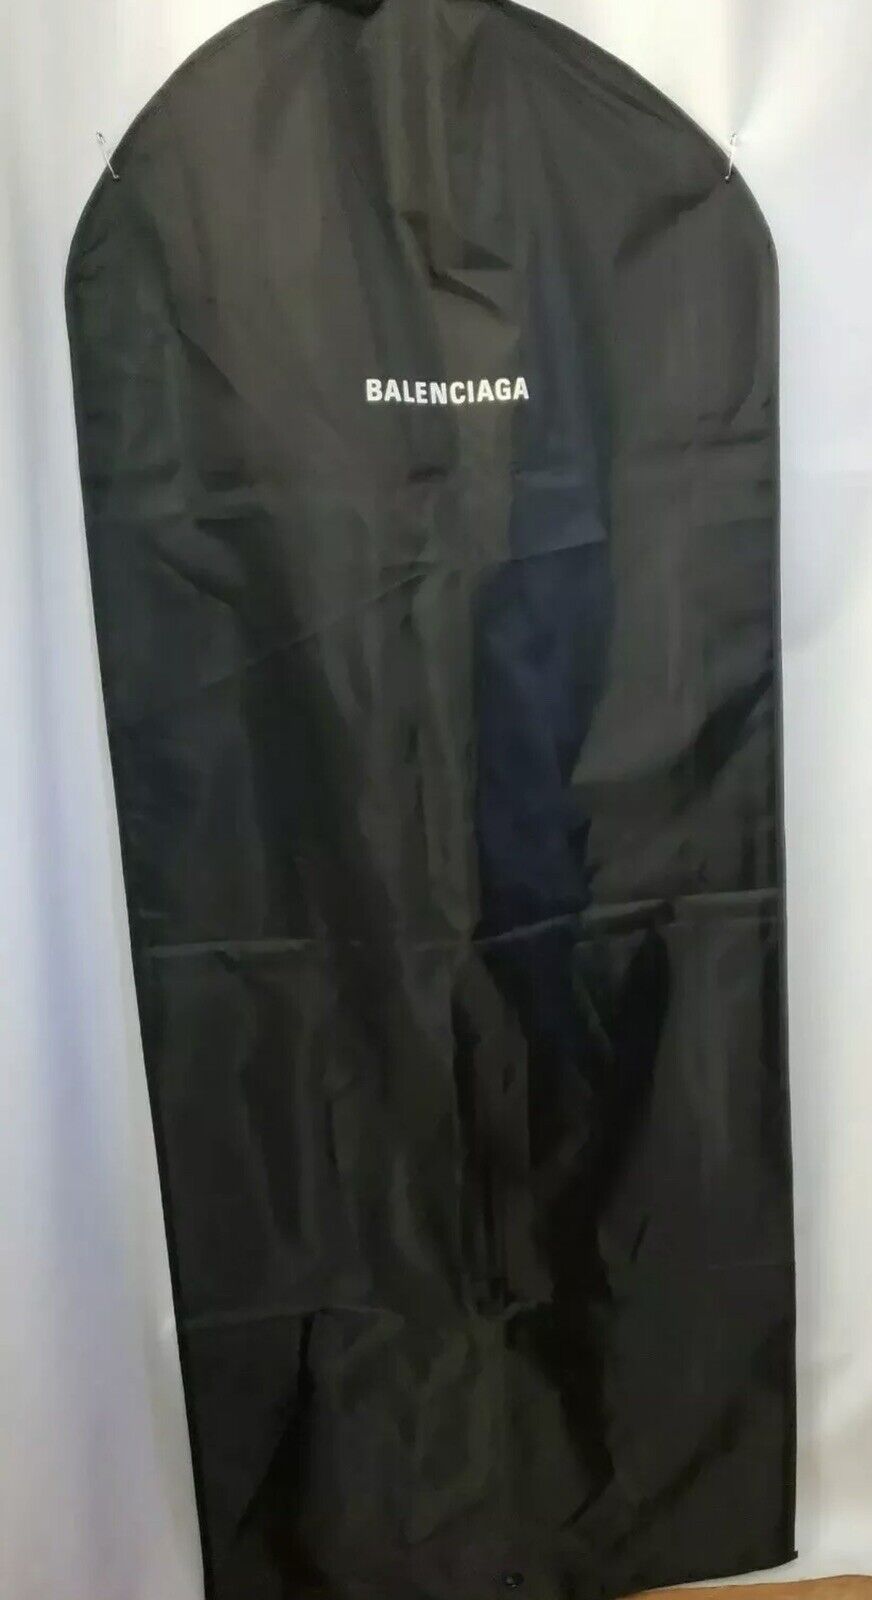 Balenciaga Black Garment Bag 46 X 25 X 5" Storage Travel